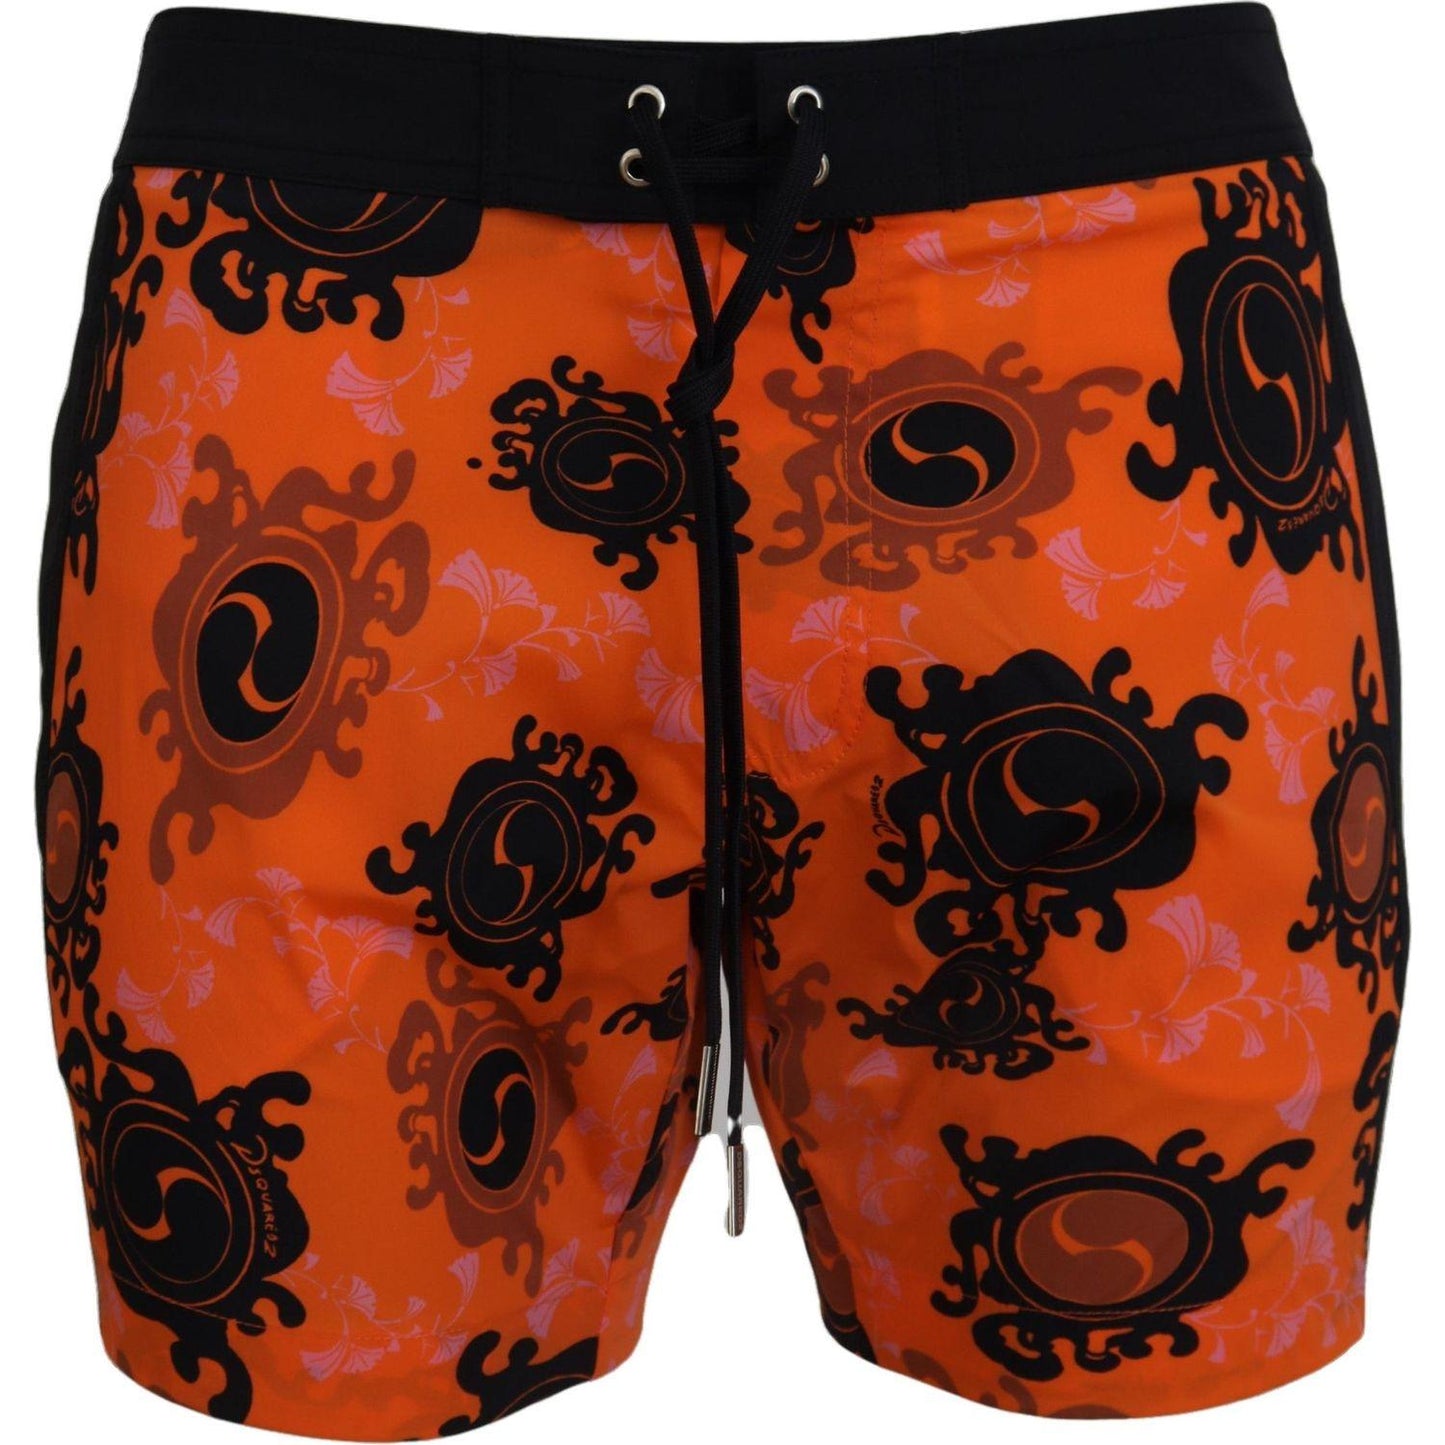 Dsquared² Chic Orange Swim Shorts Boxer for Men orange-black-printed-men-beachwear-shorts-swimwear IMG_6060-1b9c6133-bba.jpg